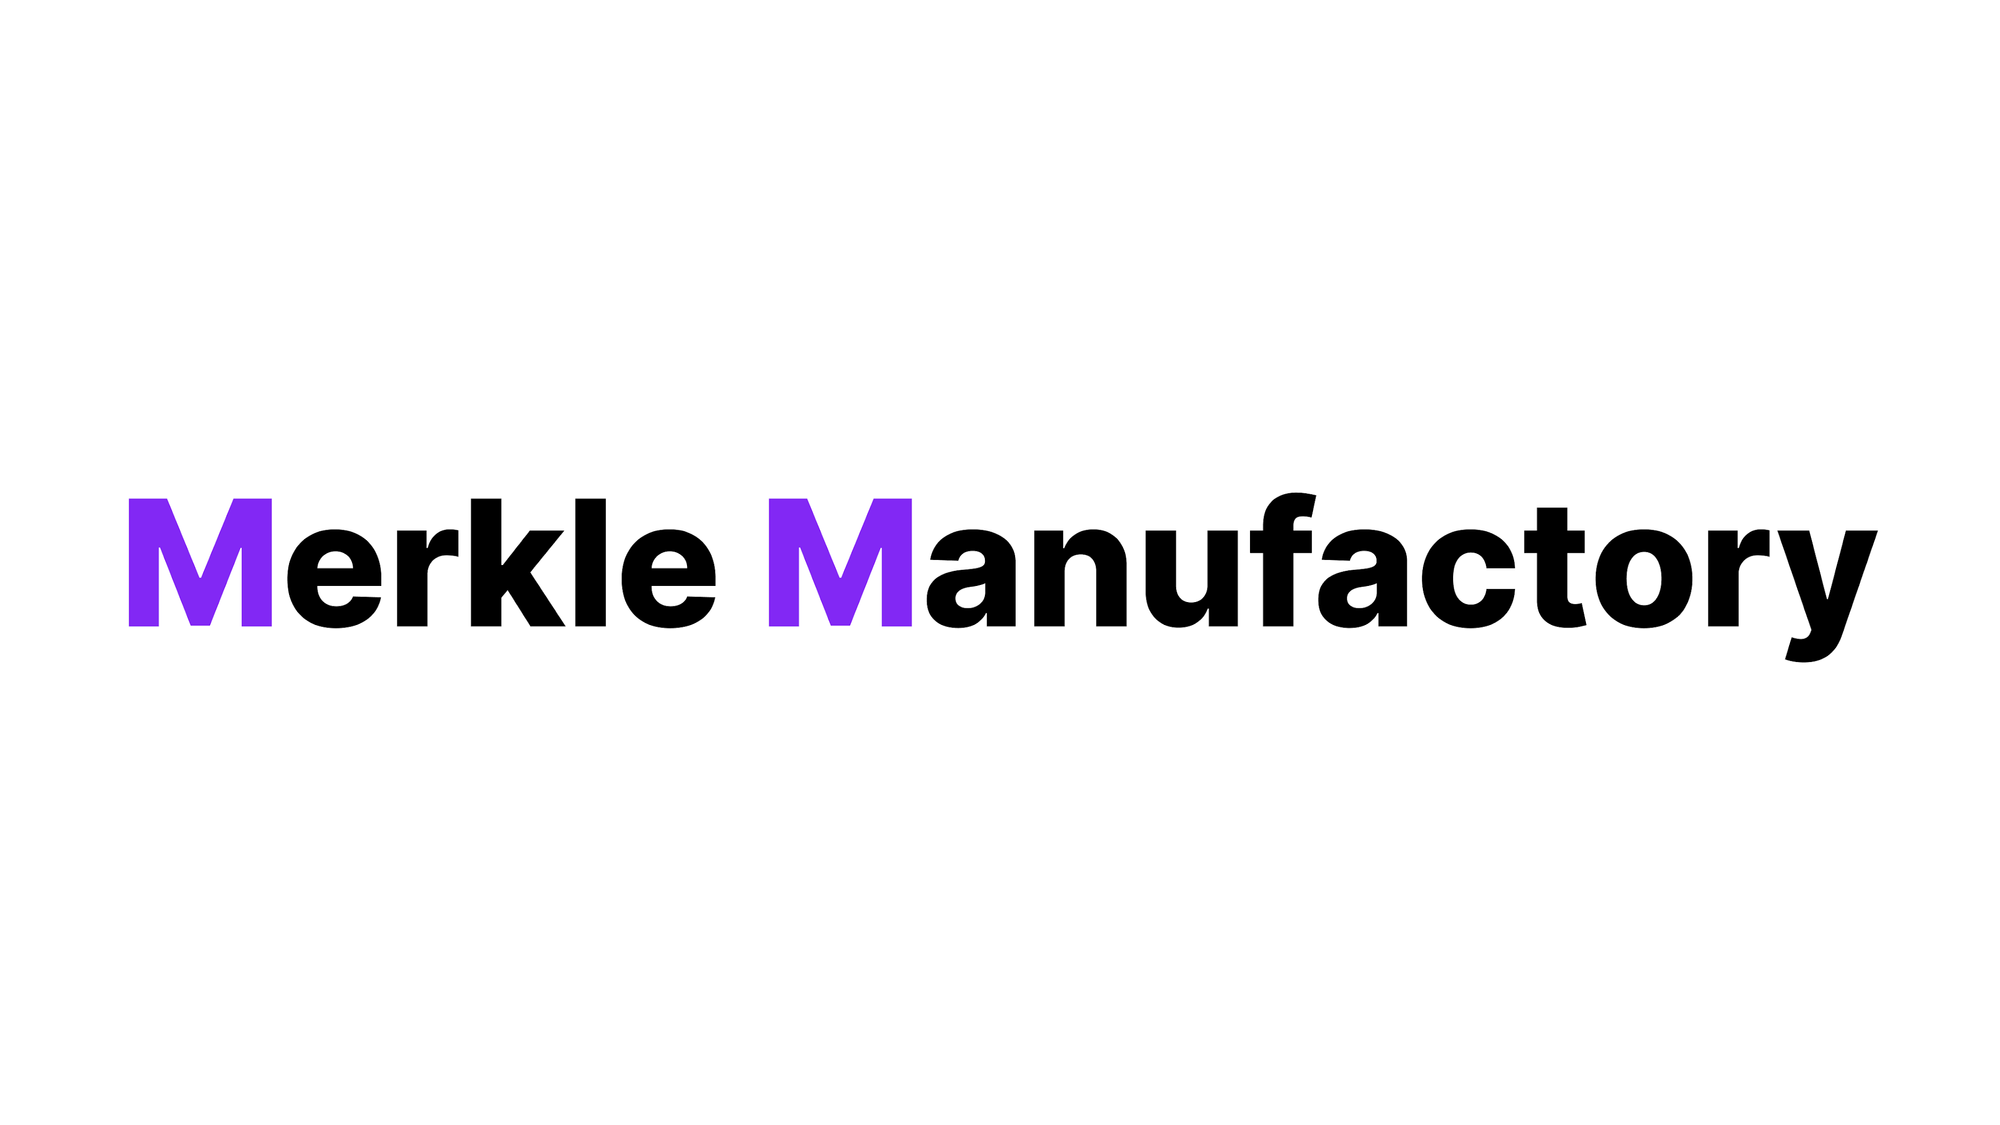 Merkle Manufactory, стоящая за крипто-проектом Farcaster привлекает 1 миллиард долларов